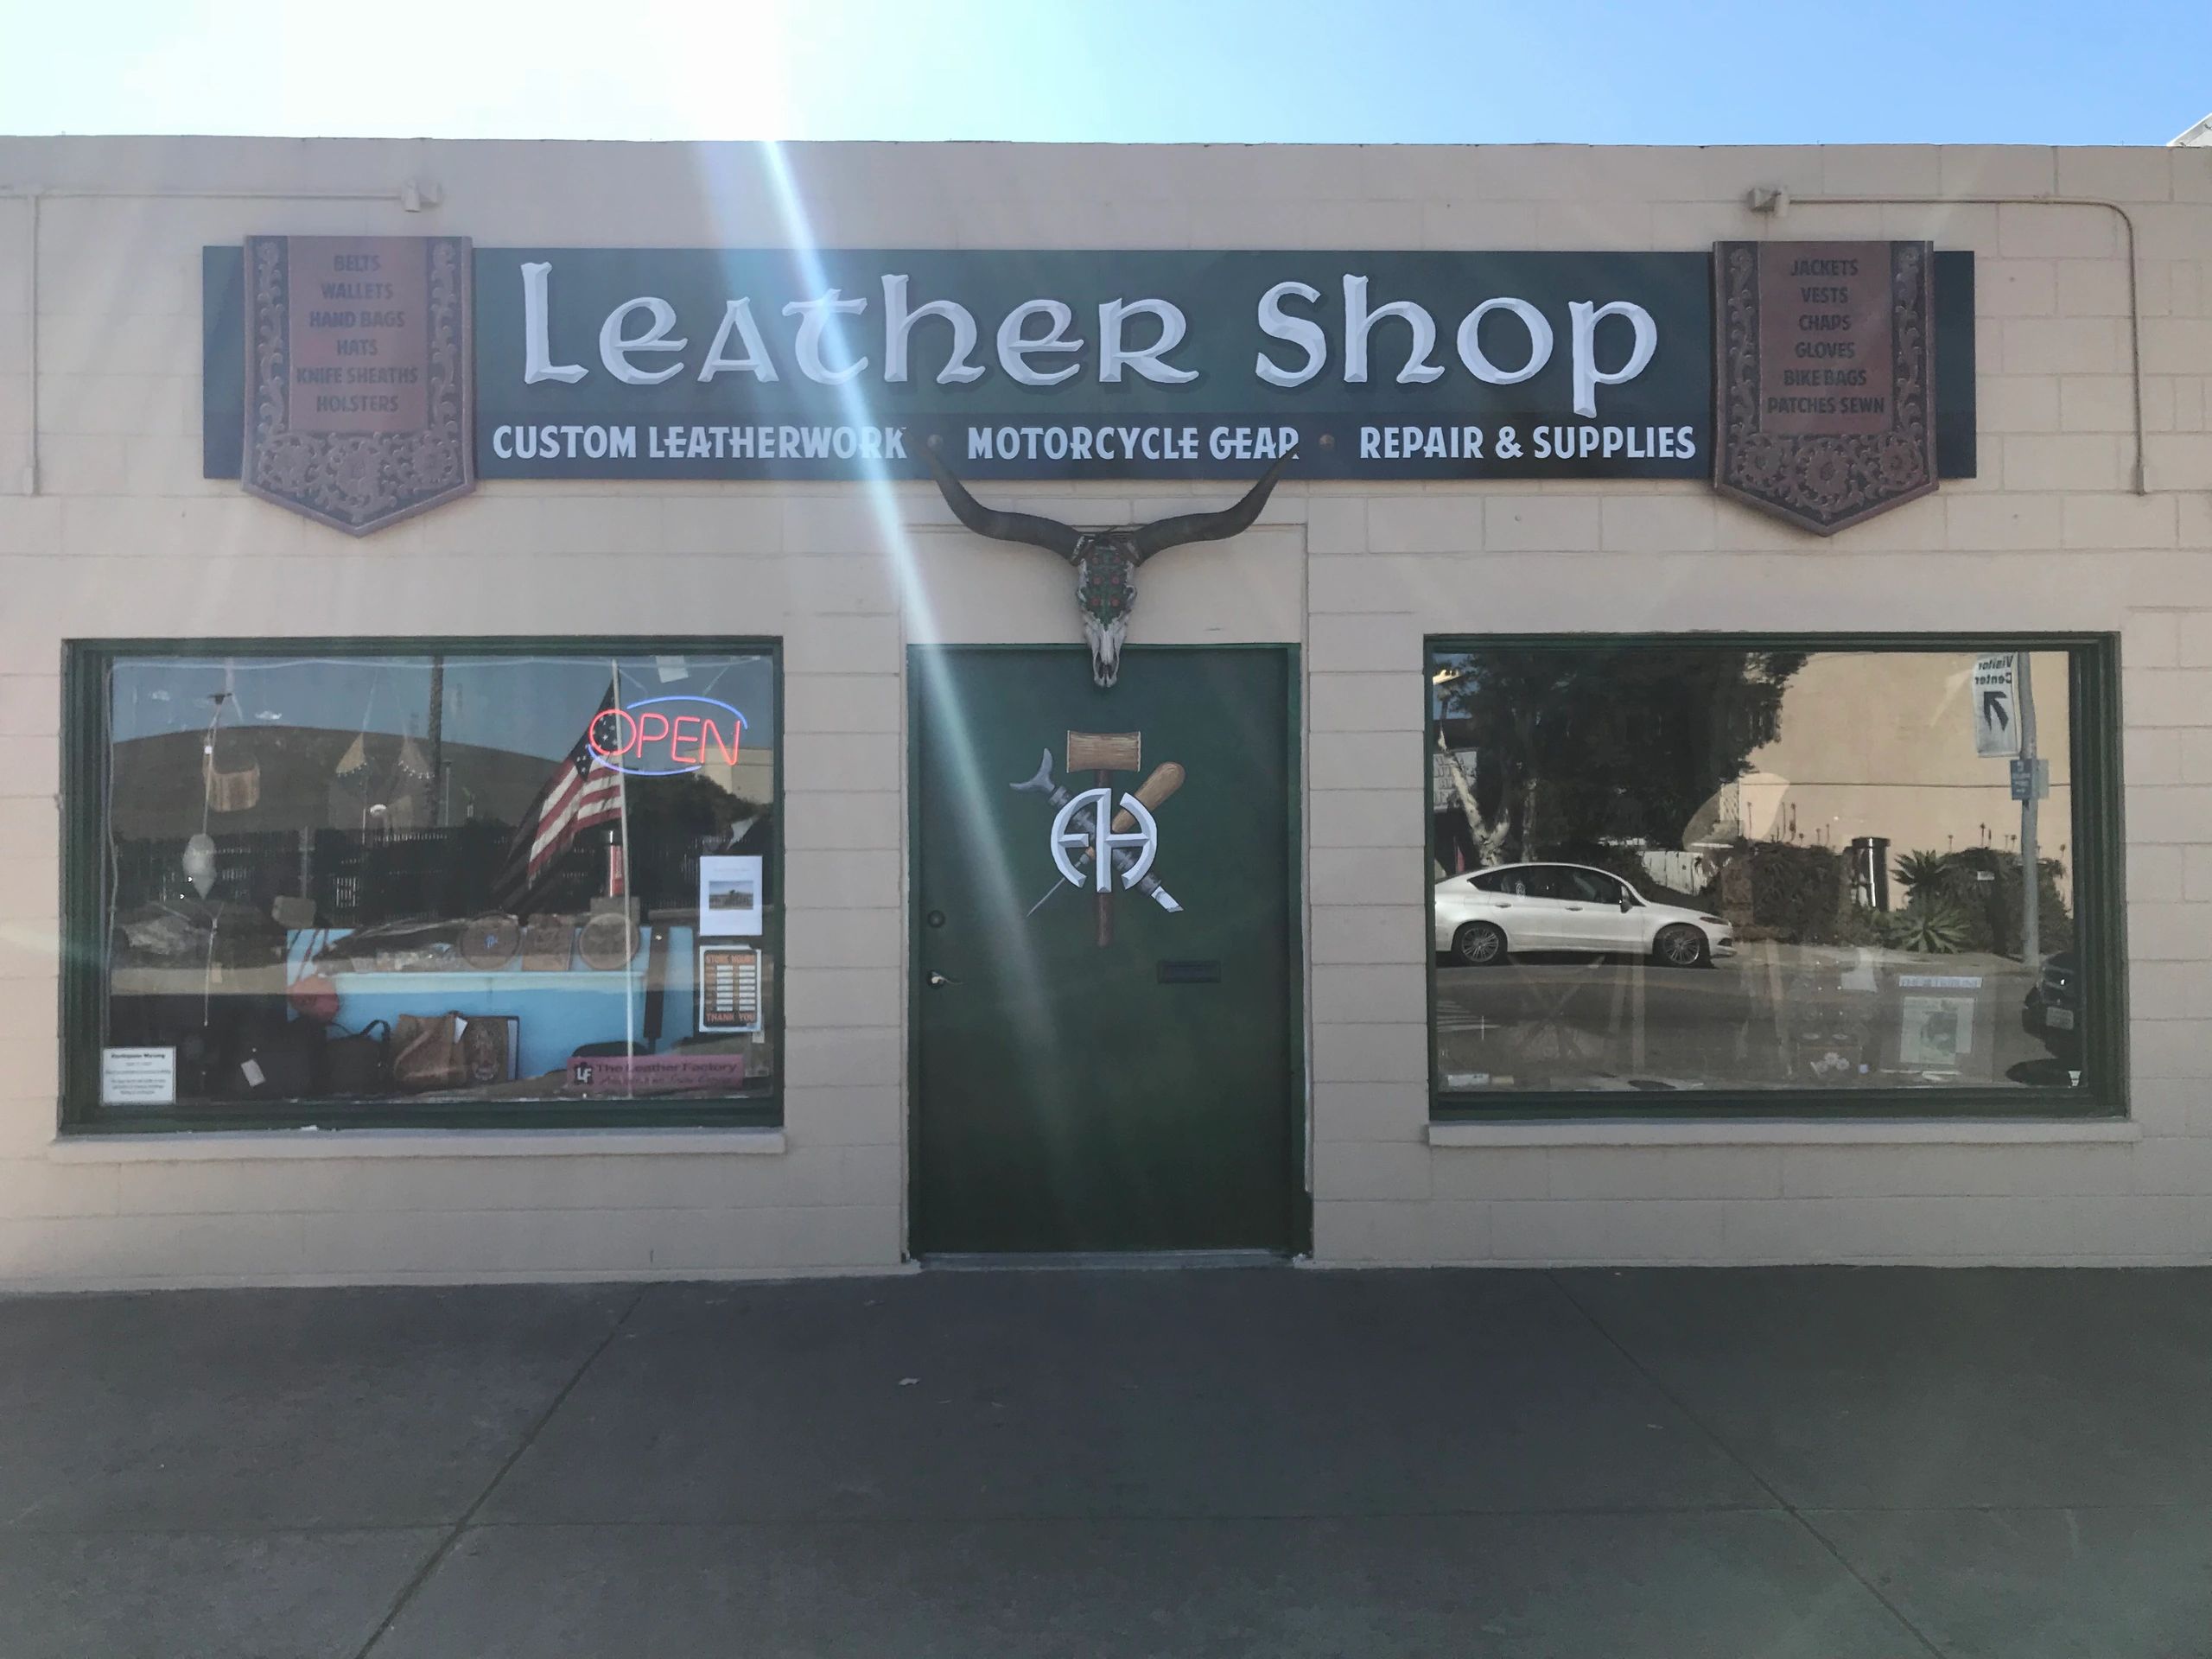 Finn's Leather Shop - Leather Goods, Leather, Handmade